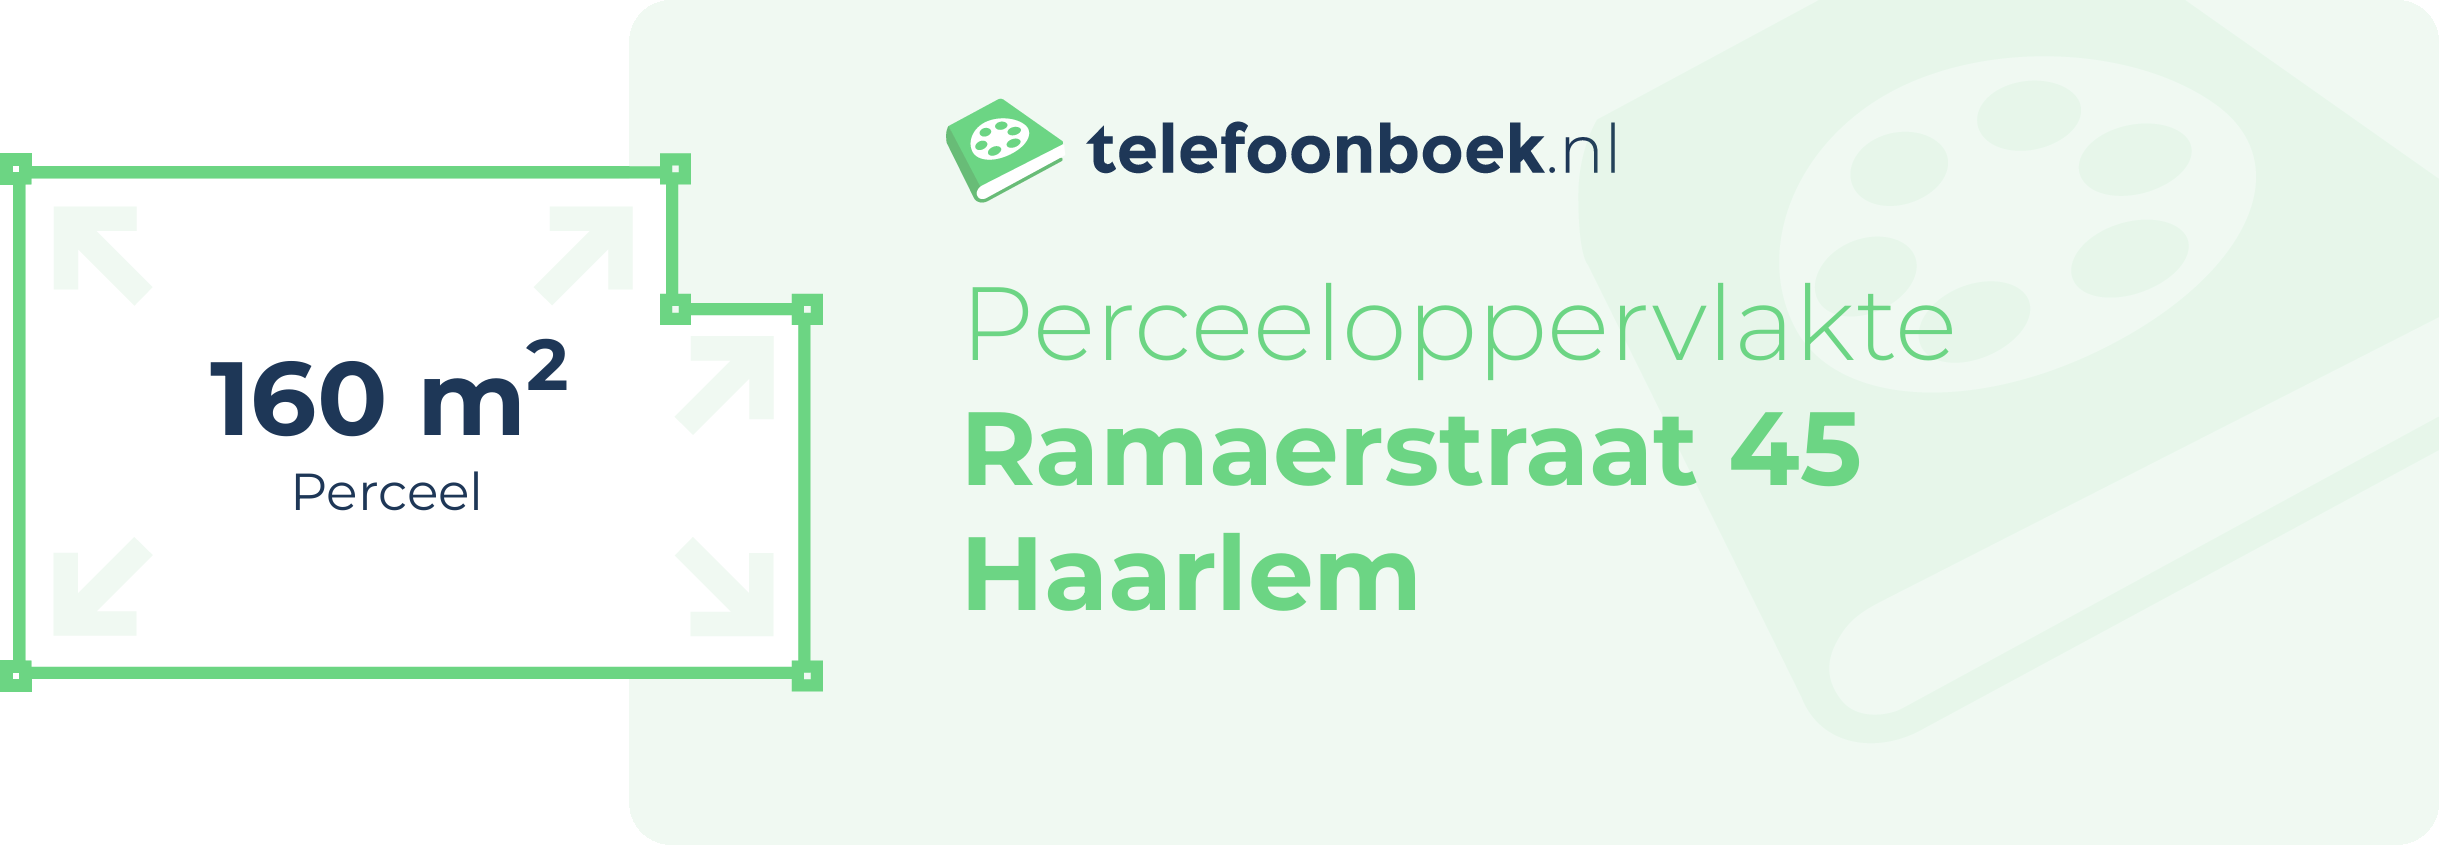 Perceeloppervlakte Ramaerstraat 45 Haarlem